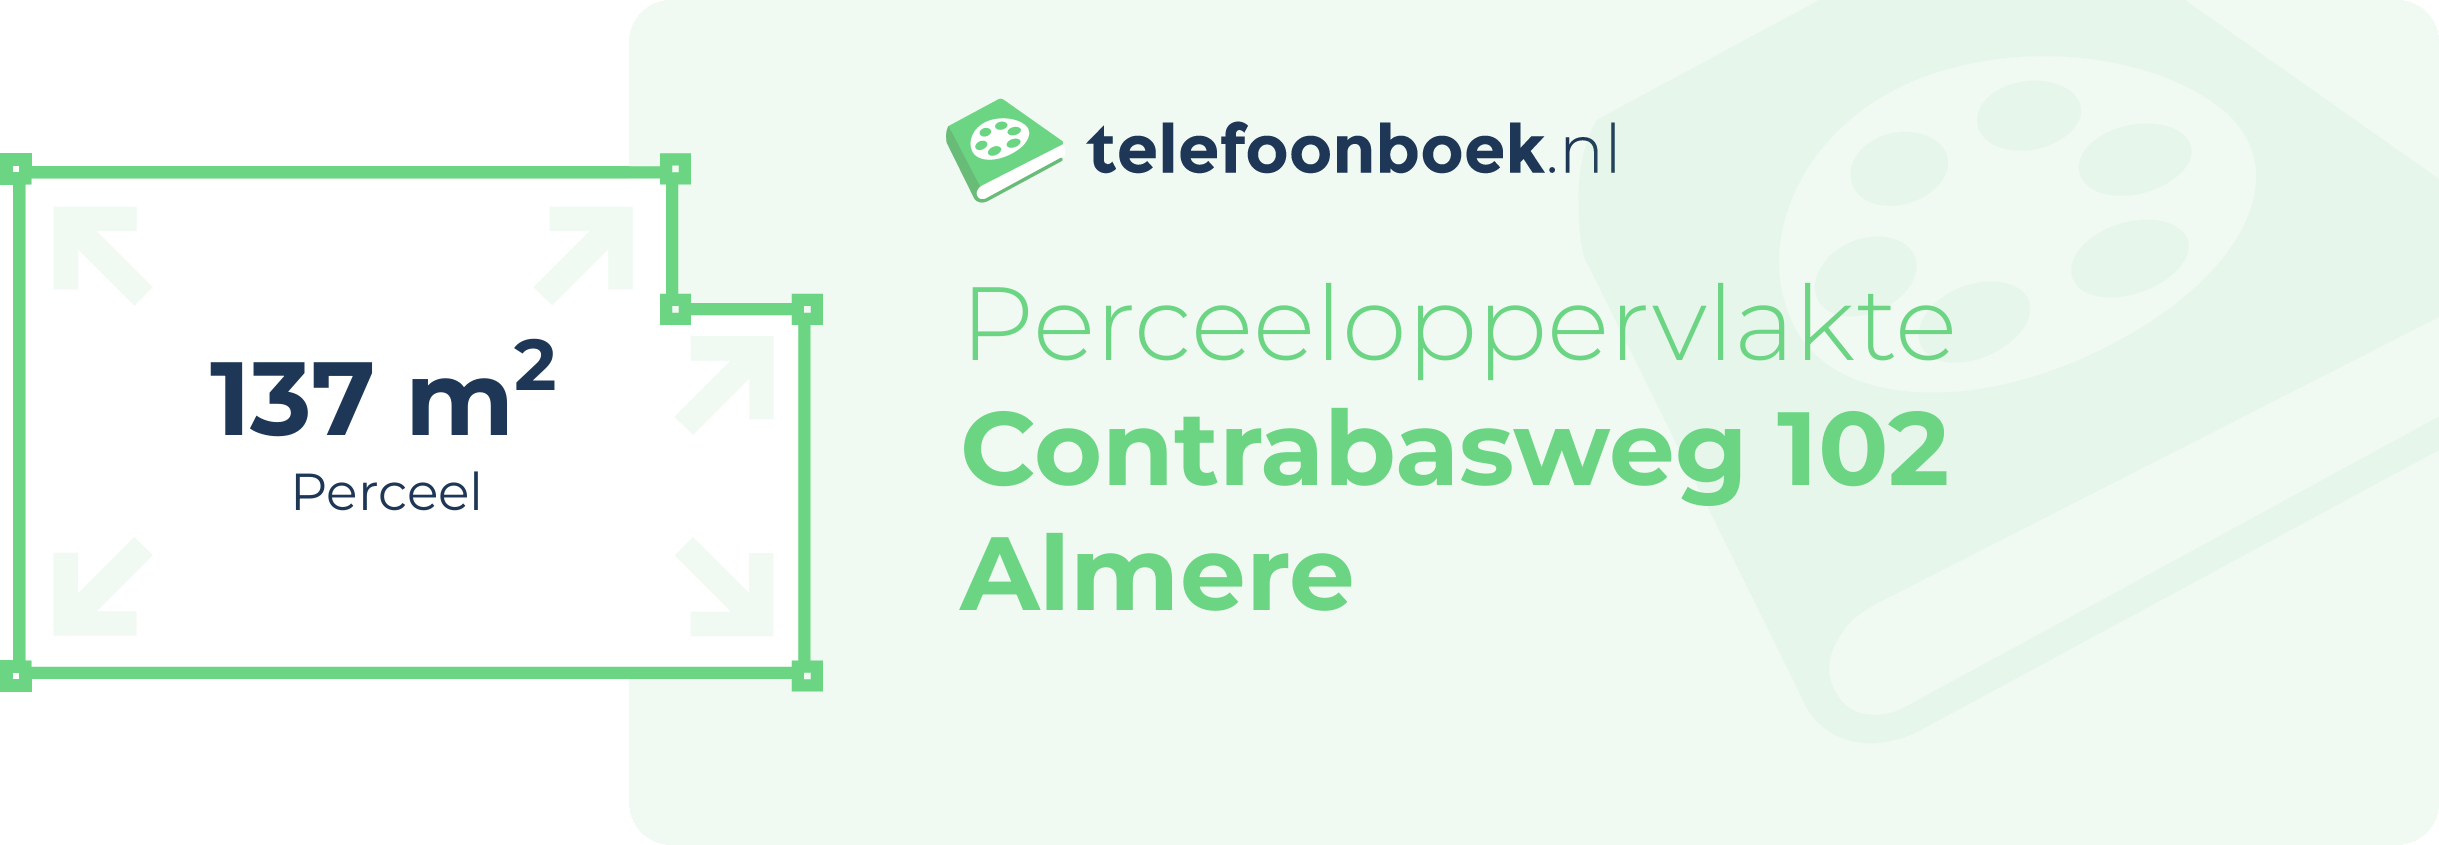 Perceeloppervlakte Contrabasweg 102 Almere